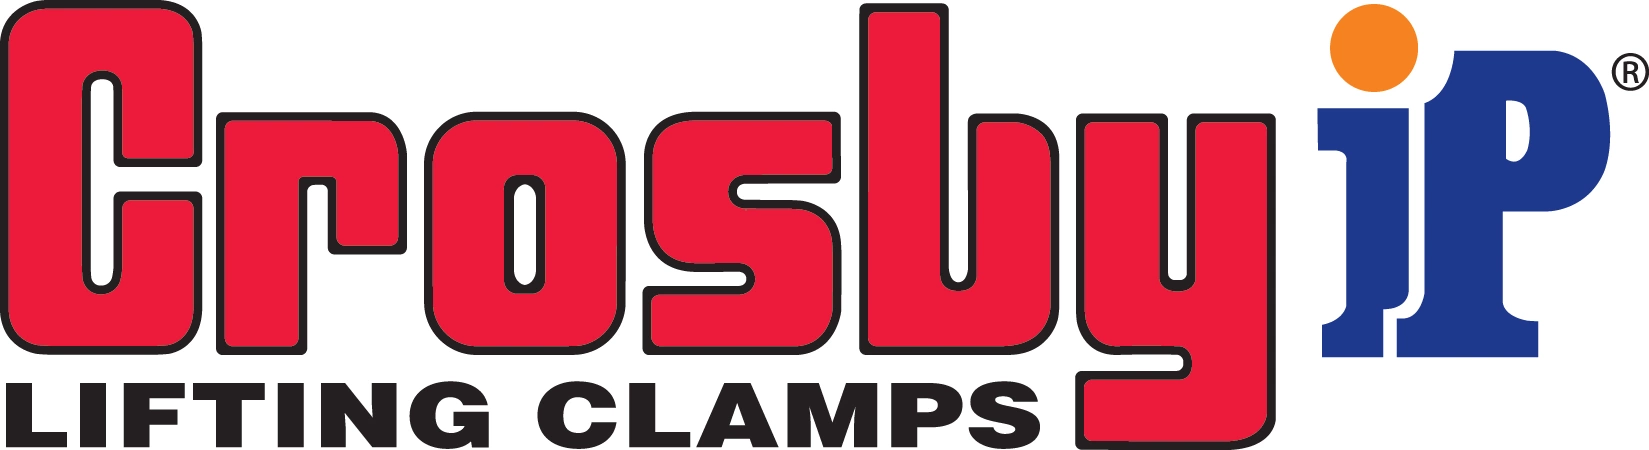 Crosby ip logo